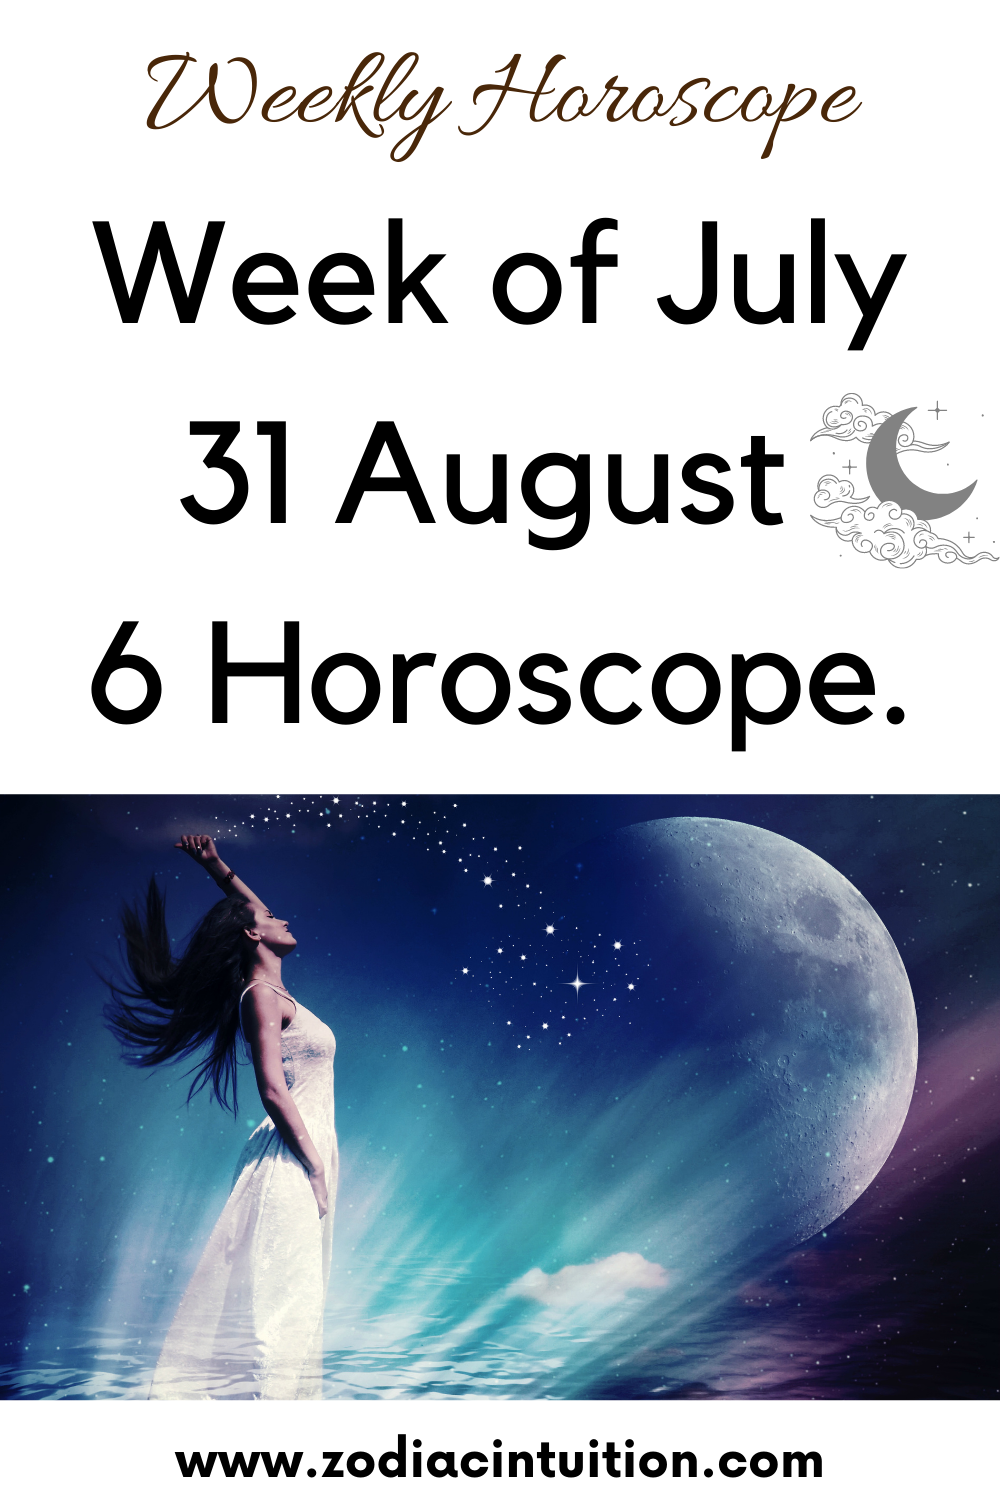 Week of July 31 August 6 Horoscope.